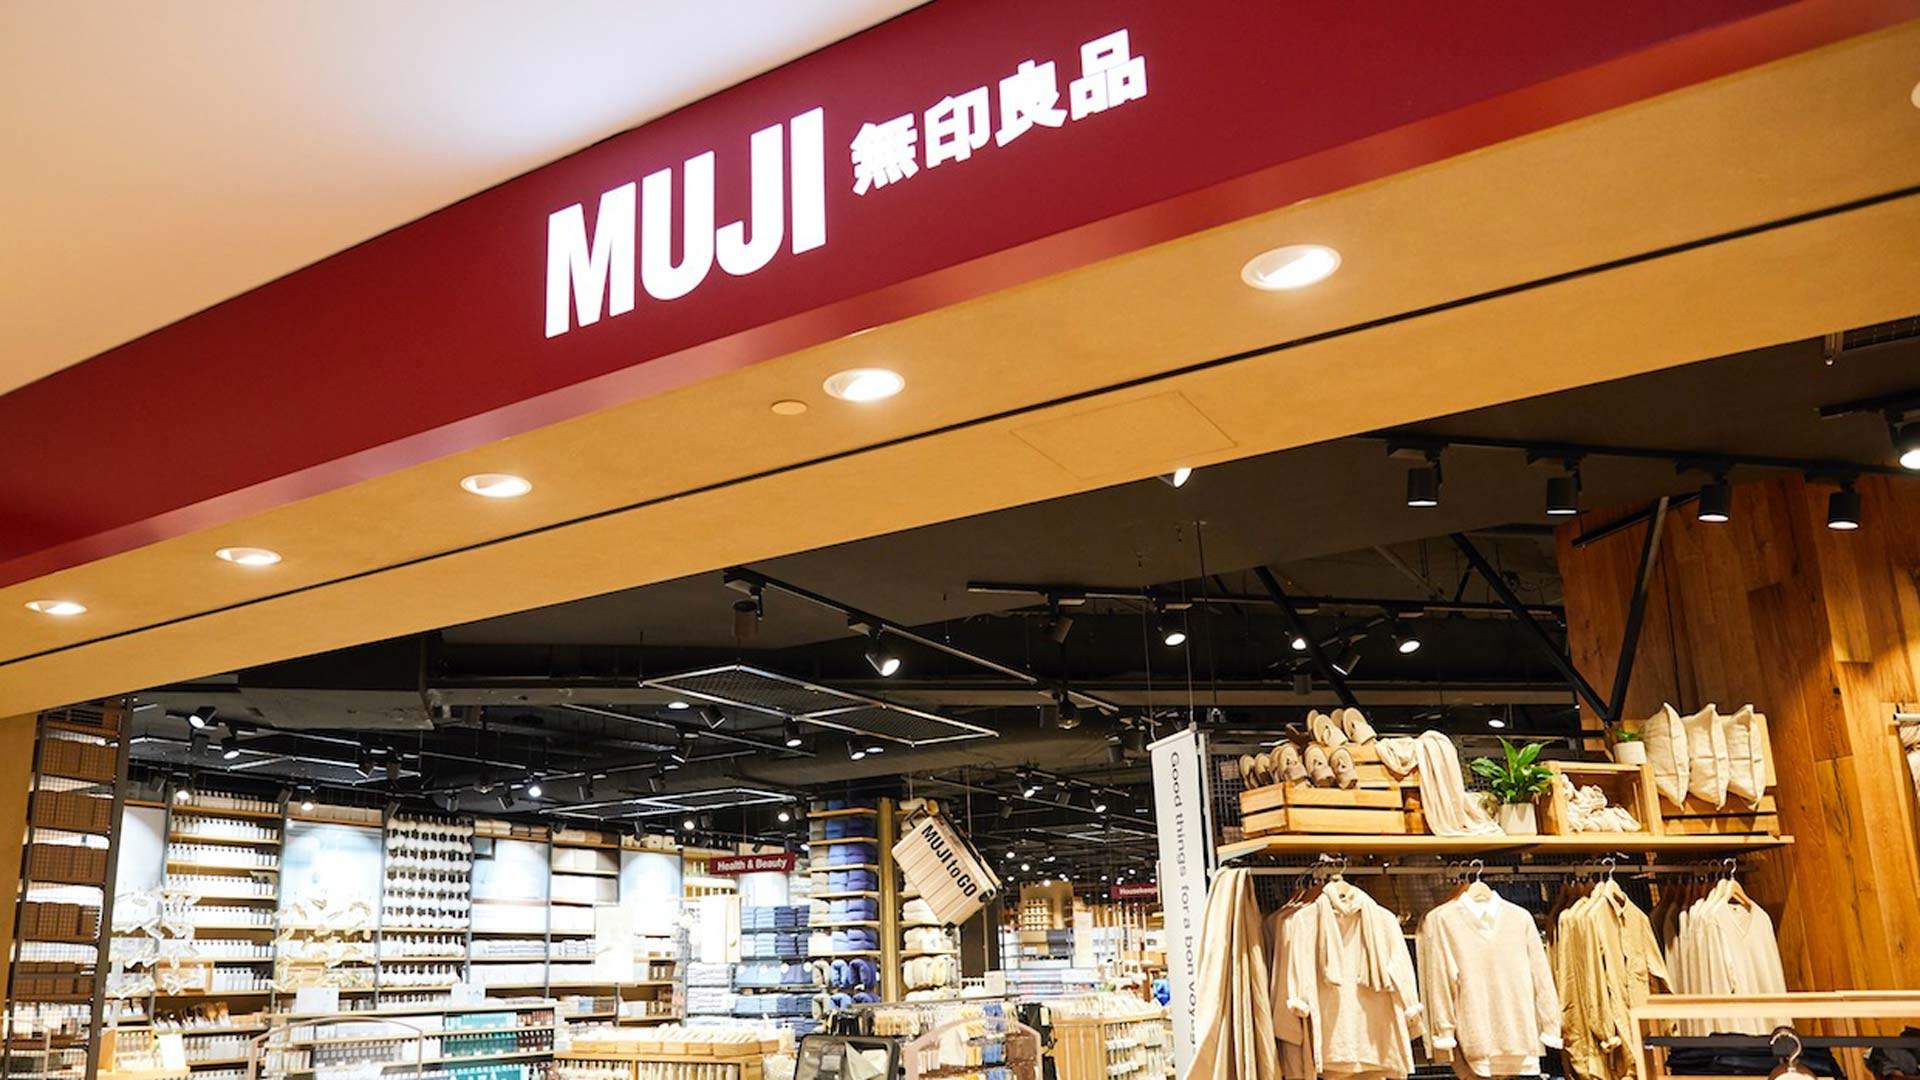 Australia's Biggest Muji Store Has Just Opened in Chadstone